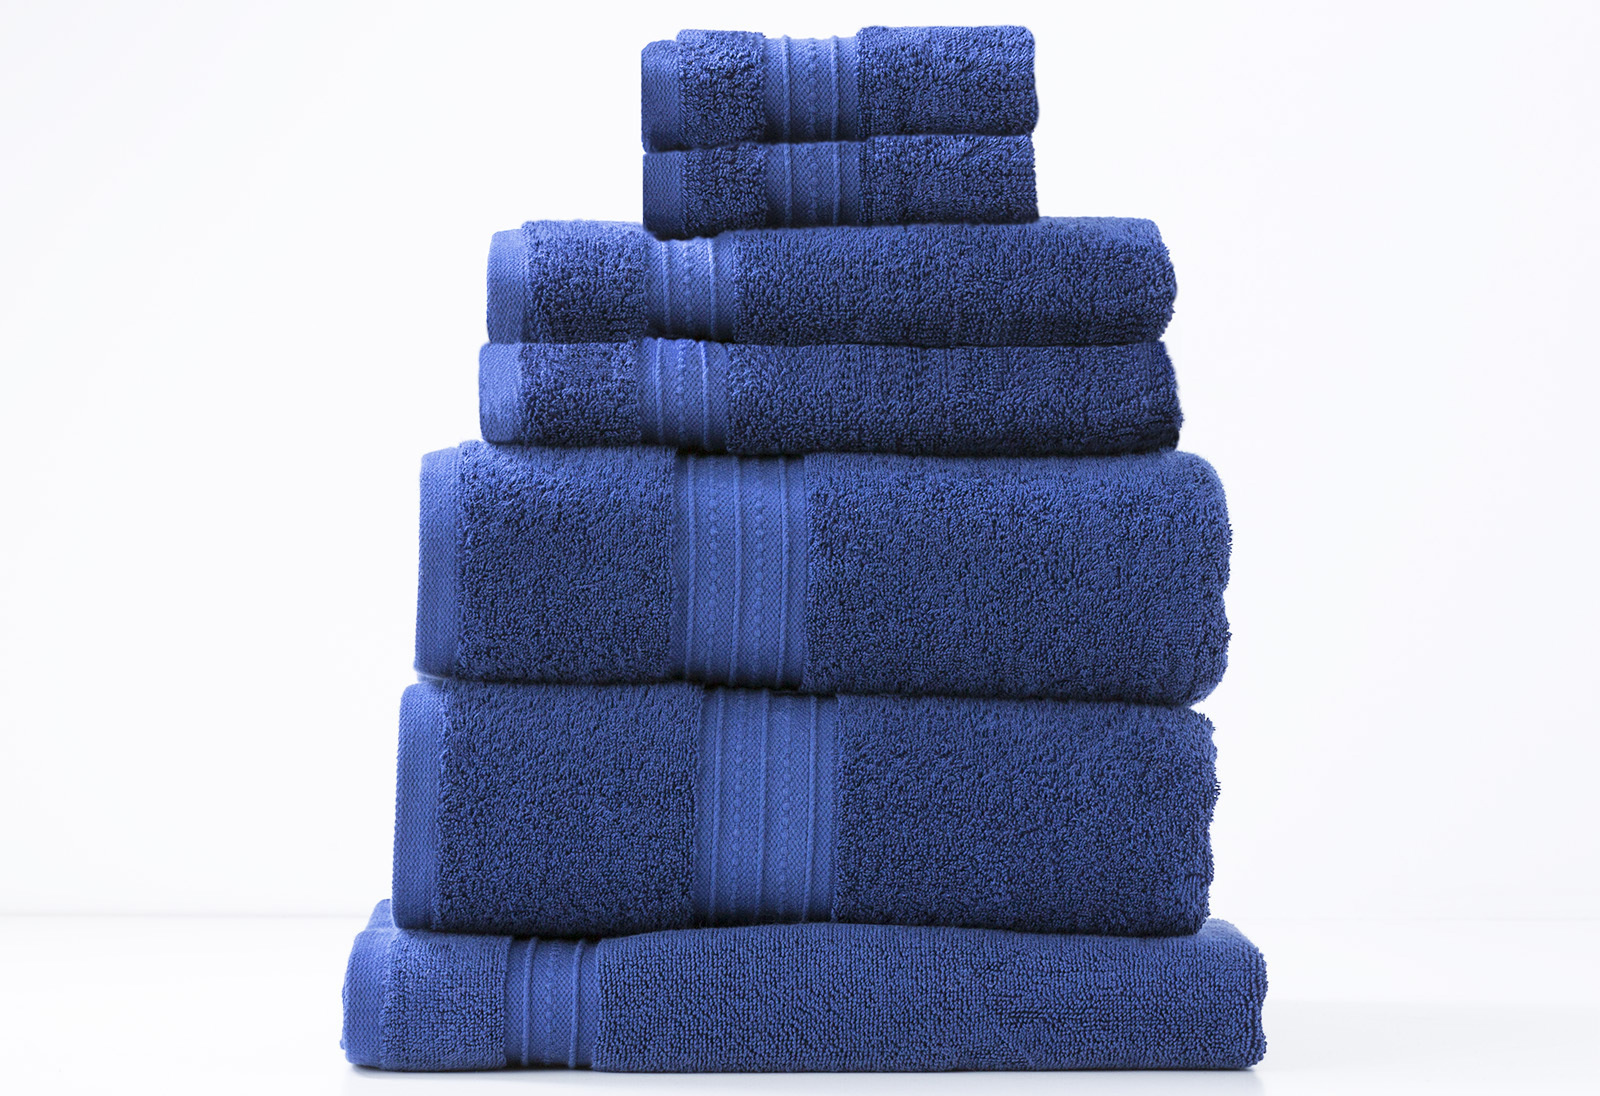 Renee Taylor Brentwood 650gsm 100% Cotton 7 Piece Bath Towel Set Royal Blue 